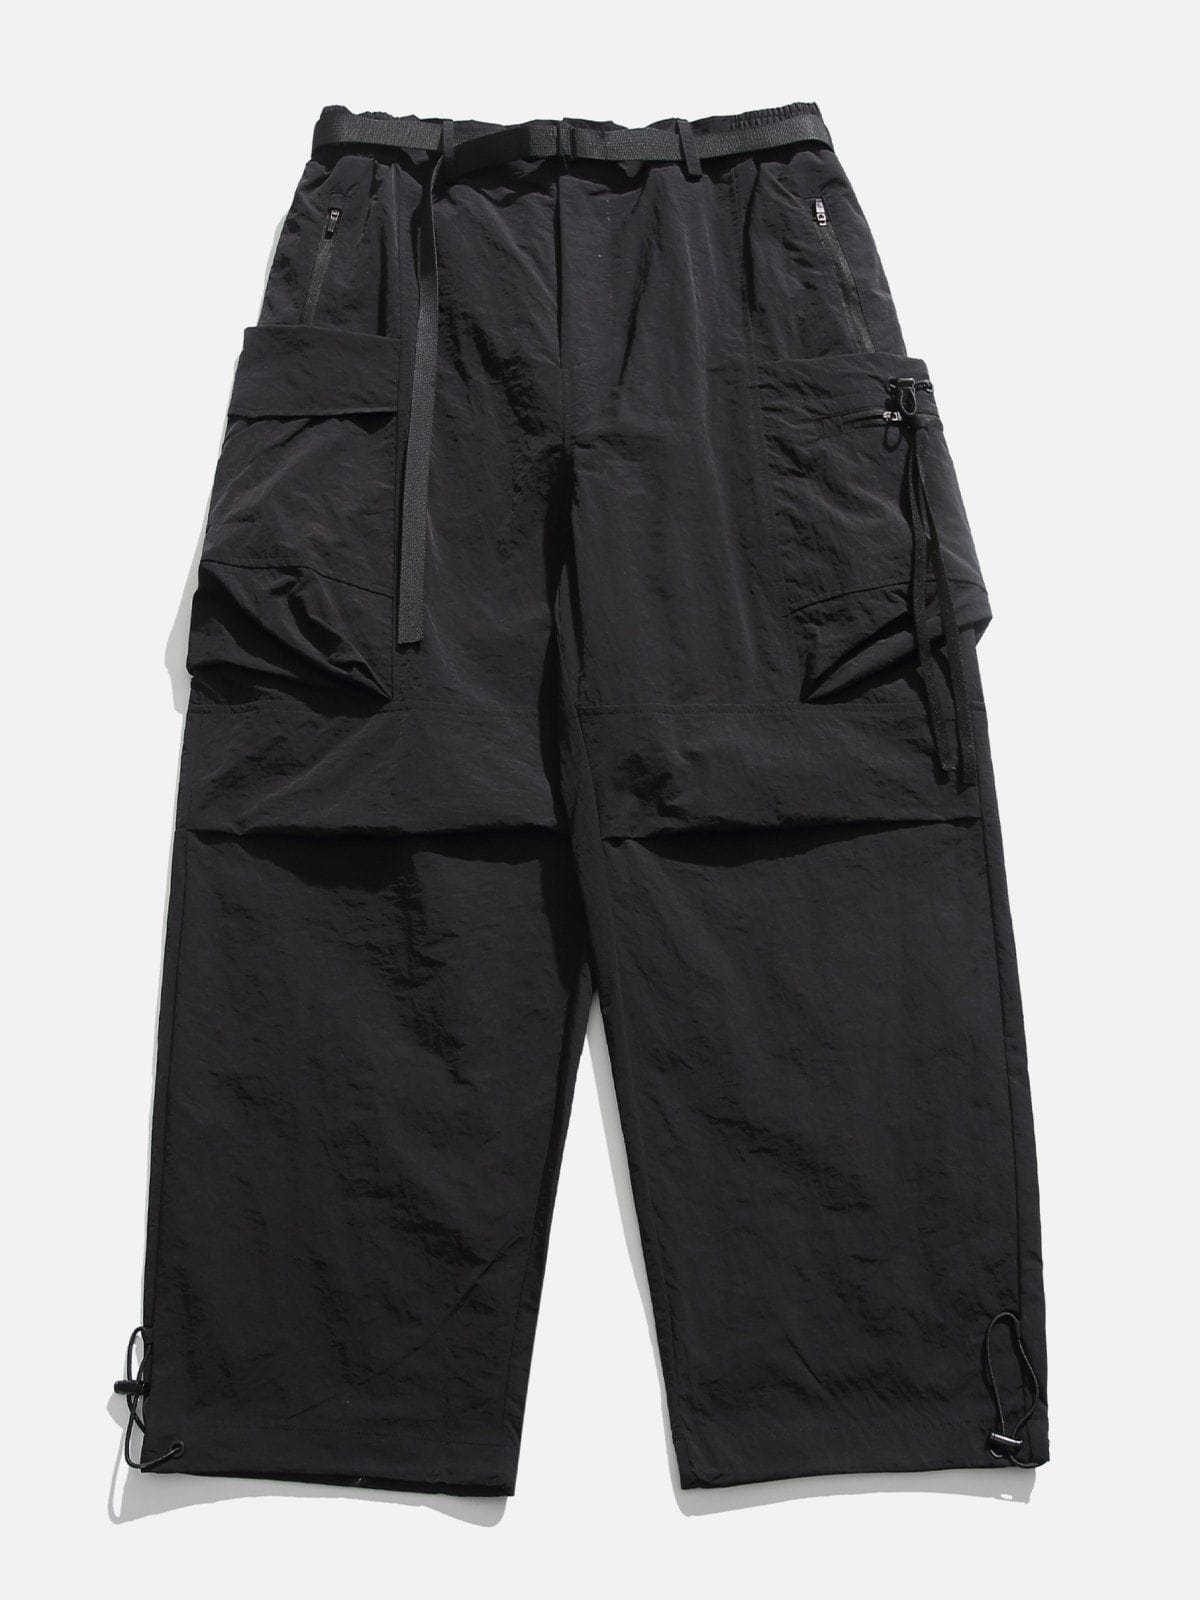 Majesda® - Large Pockets Pleated Cargo Pants outfit ideas streetwear fashion